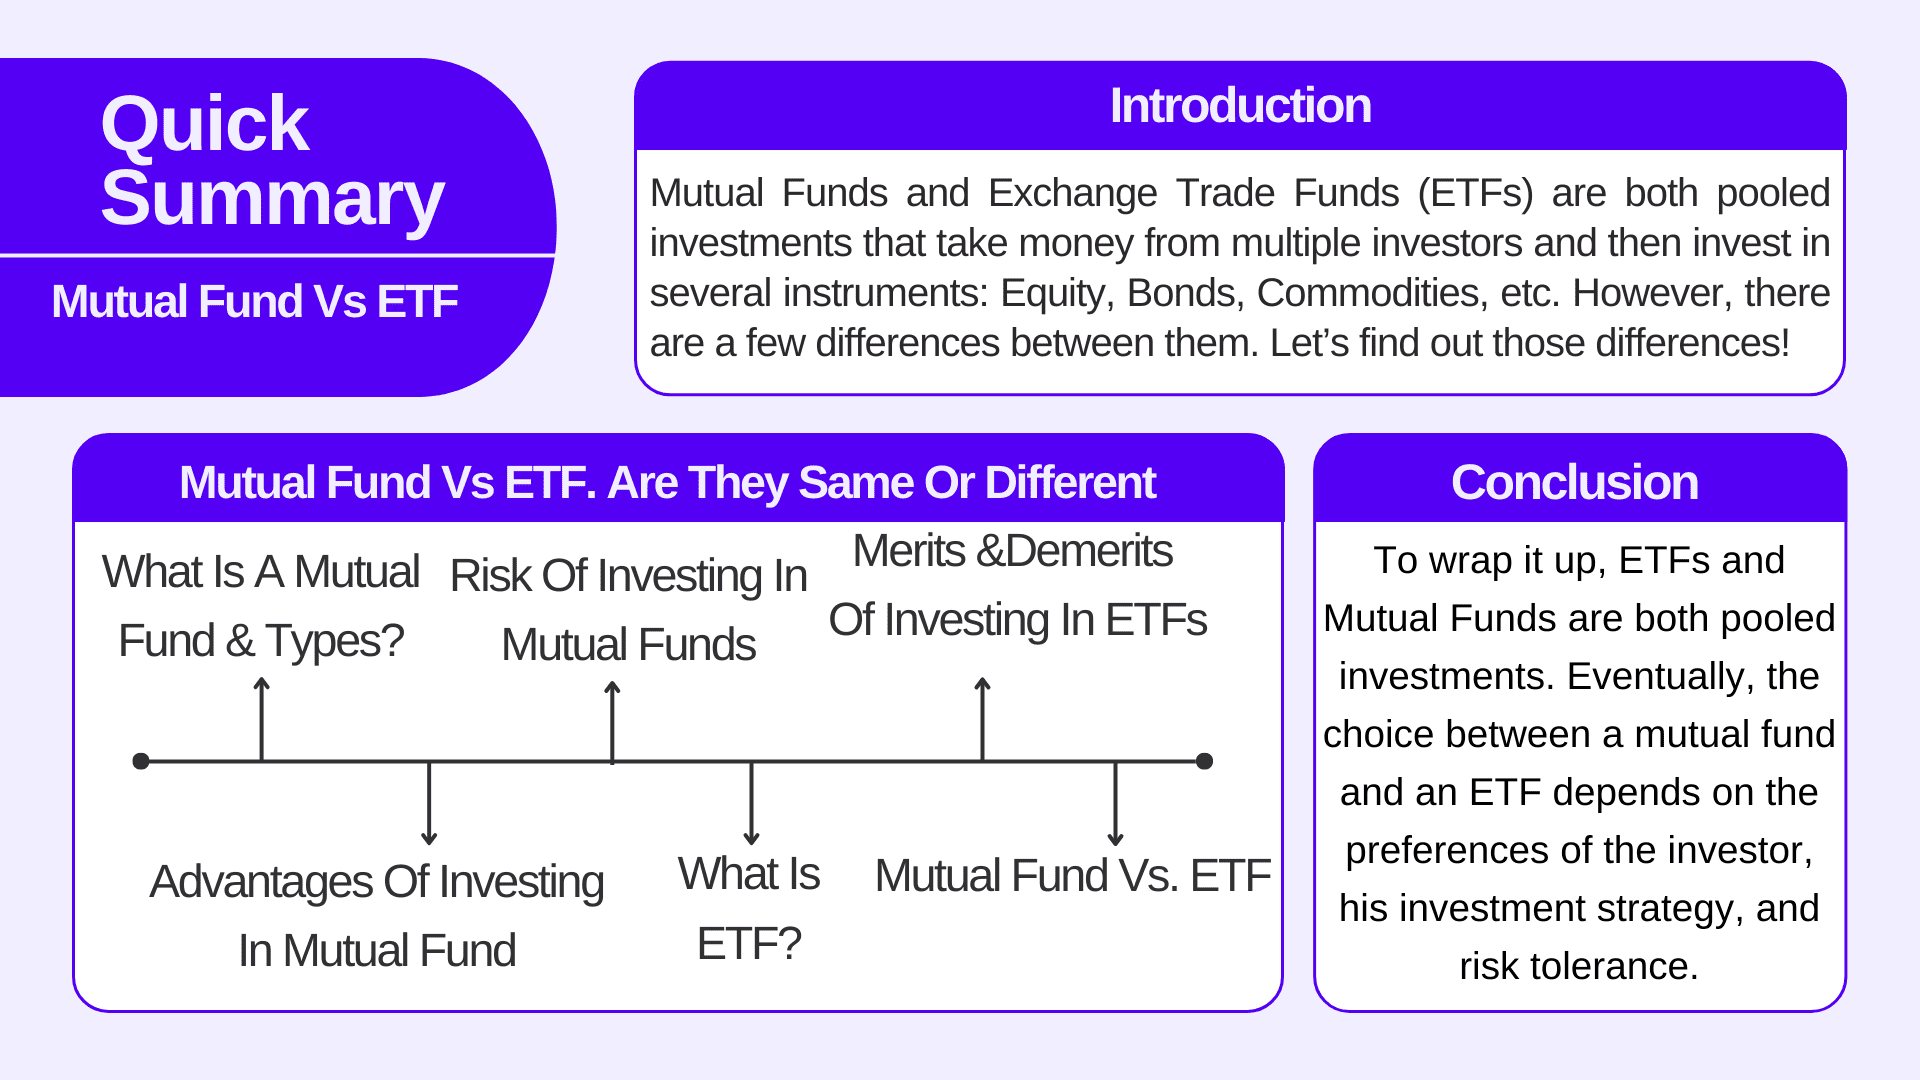 Mutual Fund Vs ETF